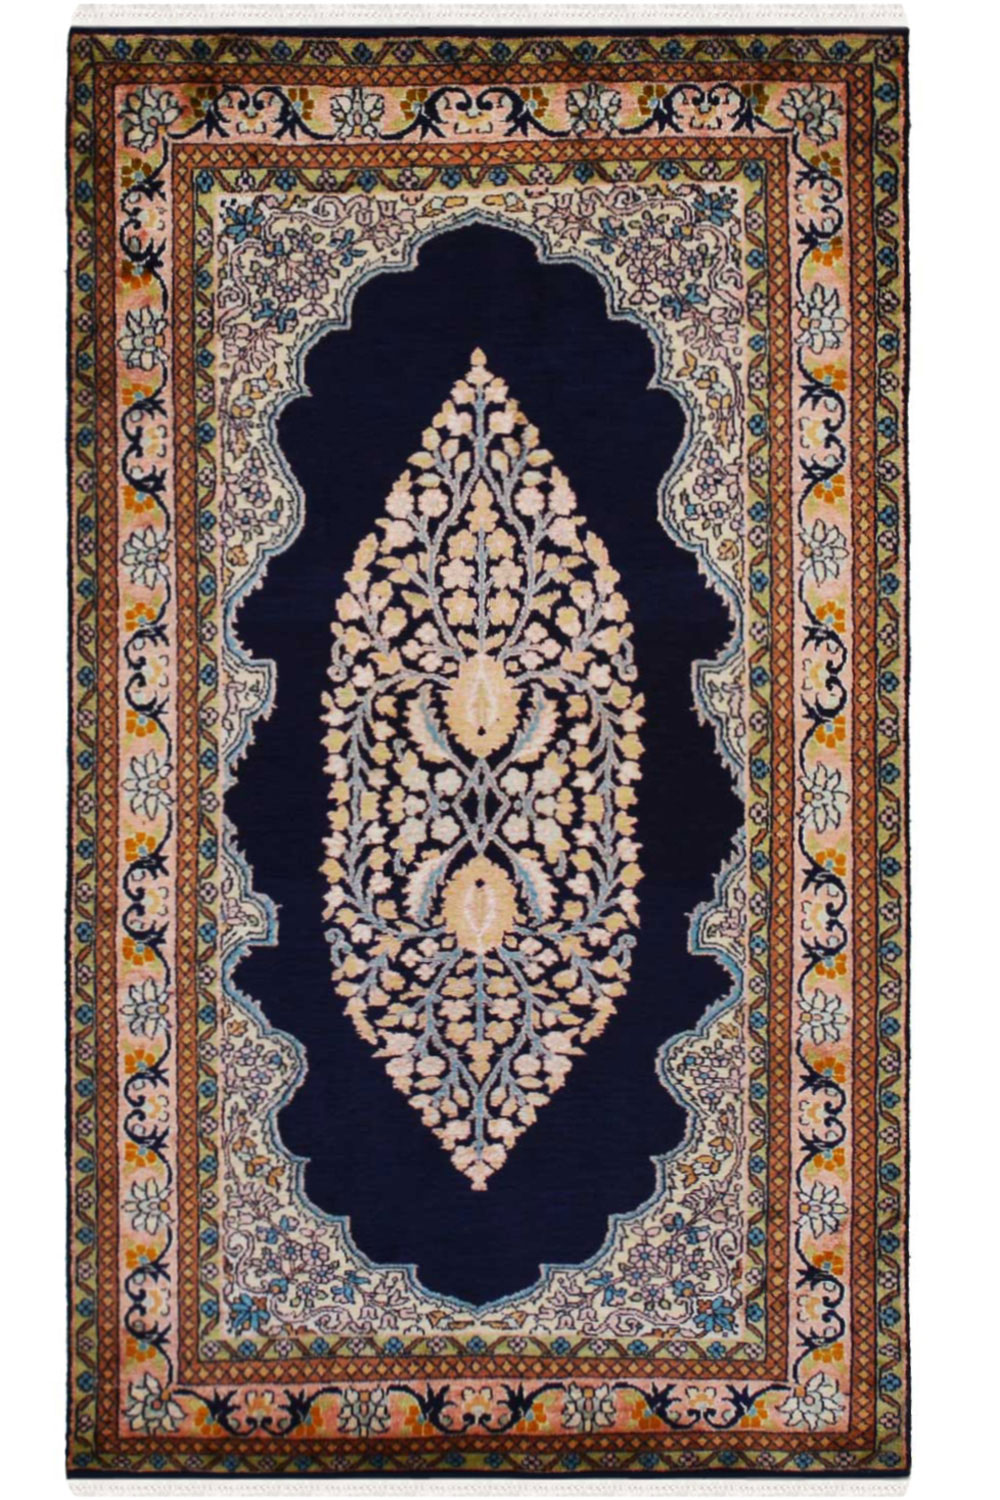 Royale Open Kashan kashmiri silk carpet with ultimate material